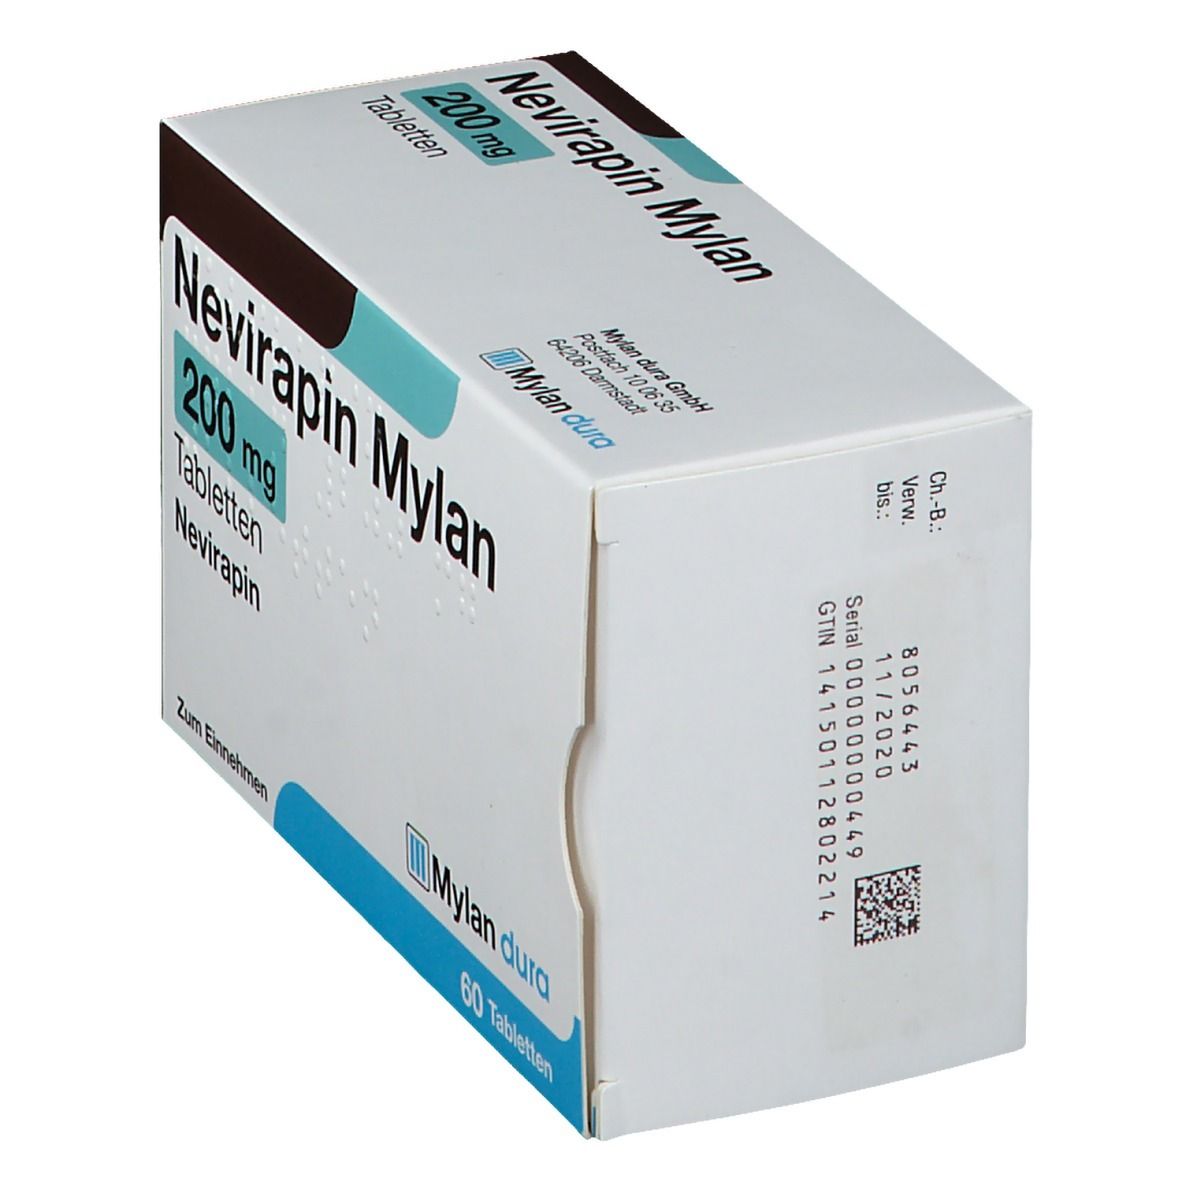 NEVIRAPIN Mylan 200 mg Tabletten